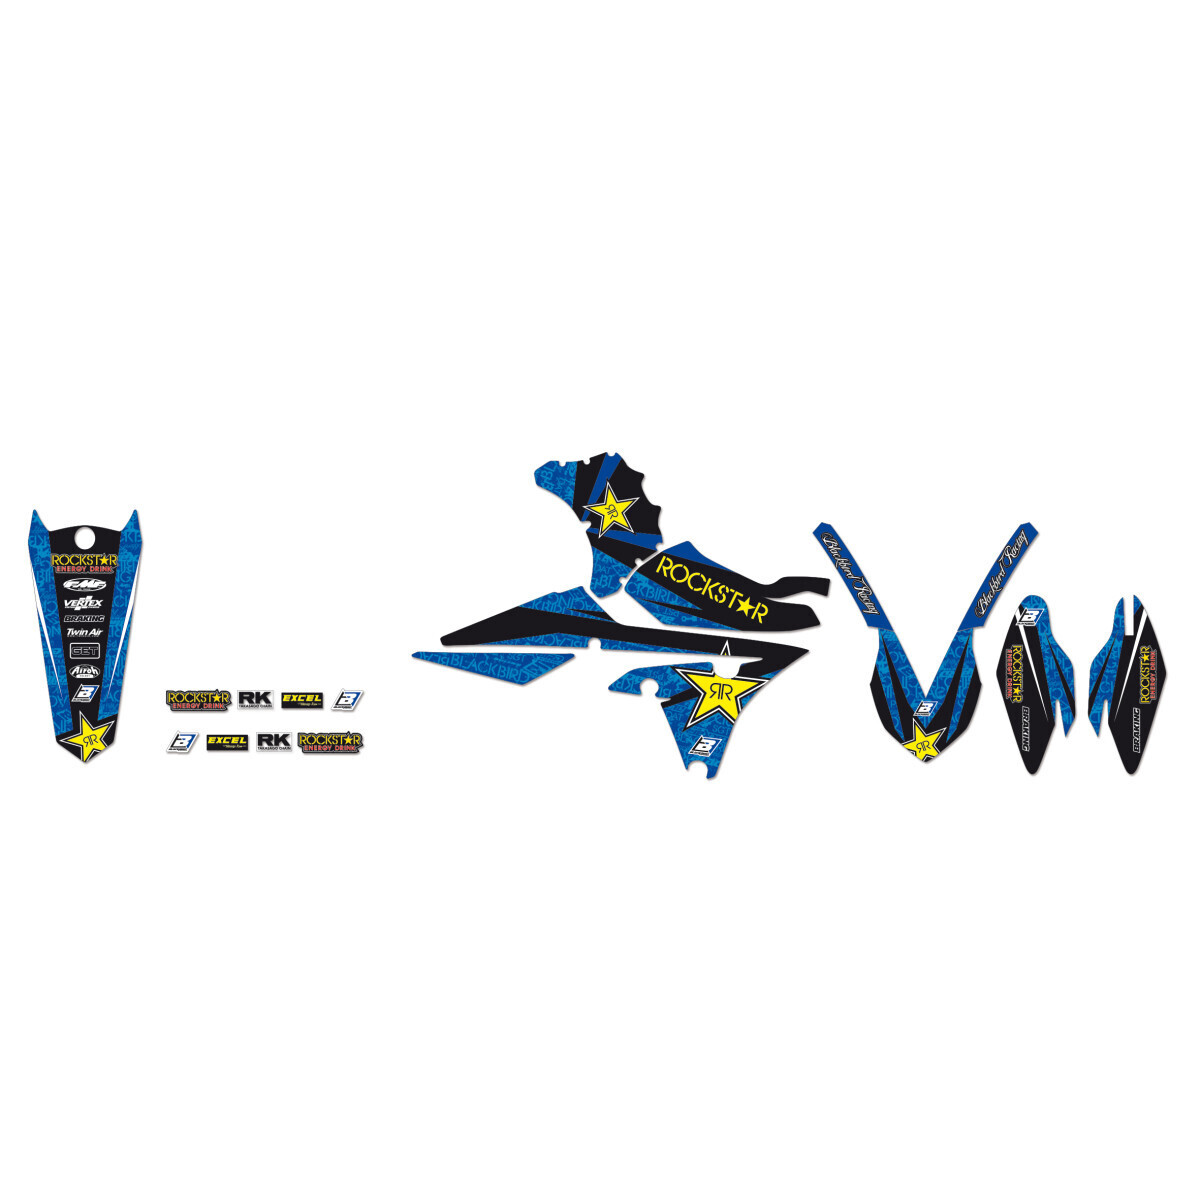 BLACKBIRD RACING
ROCKSTAR ENERGY GRAPHIC KIT BLUE/BLACK/YELLOW YAMAHA YZ